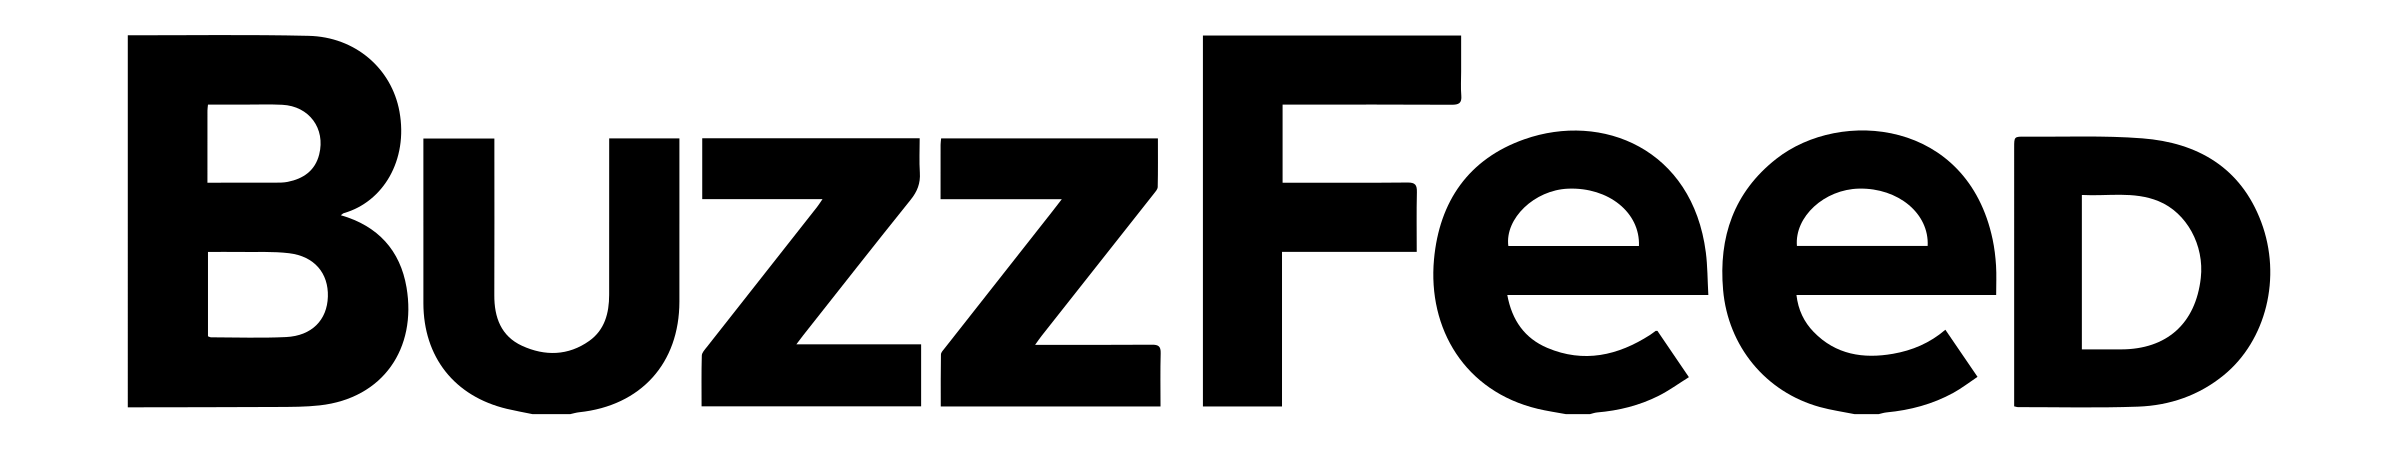 buzzfeed-logo-black-transparent-1.png